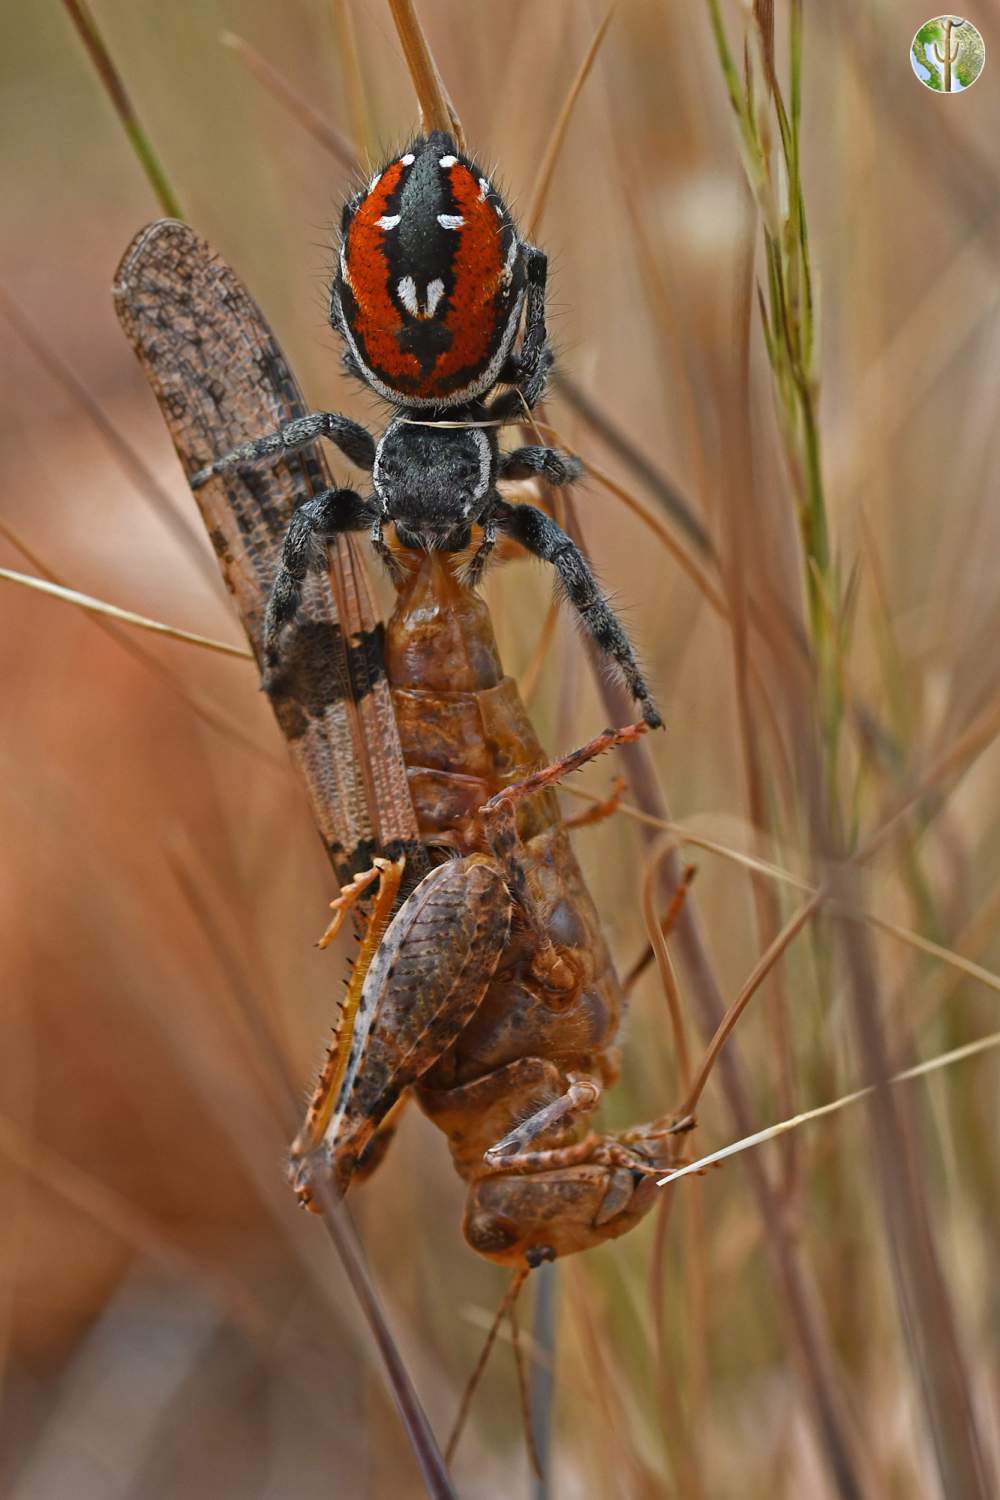 Phidippus carneus carrying trimerotropis pallidipennis (jumping spider eating grasshopper)